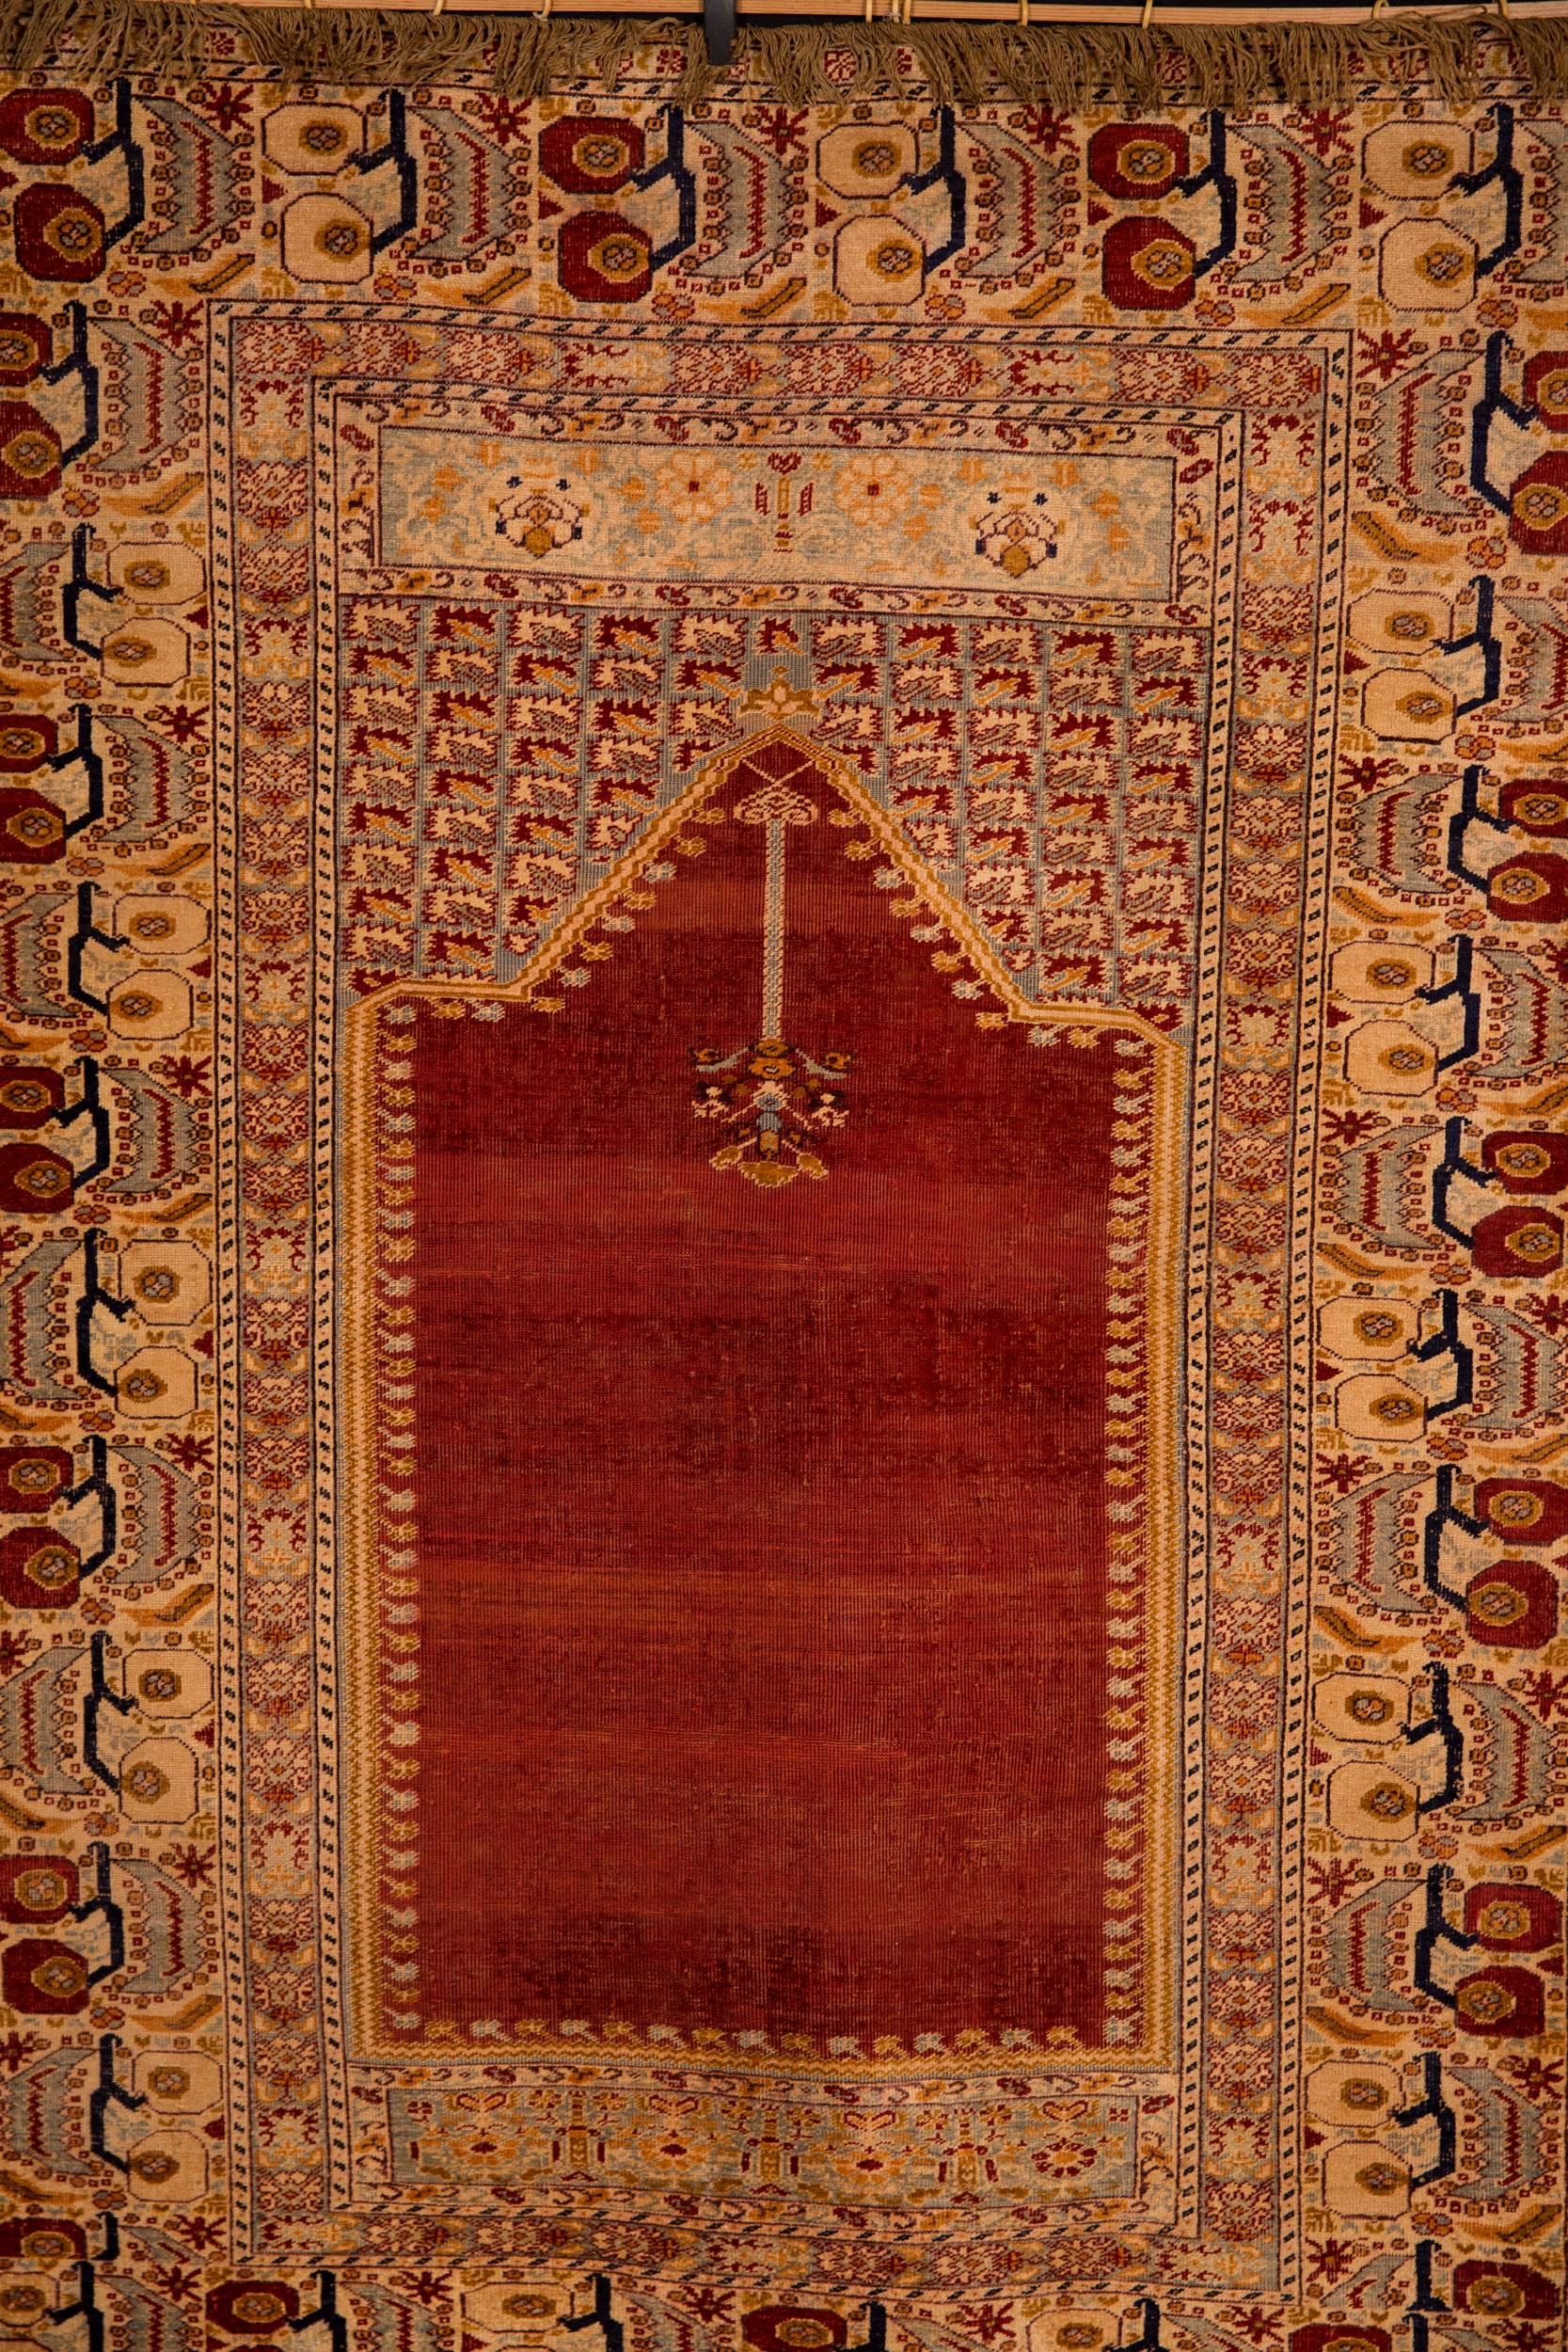 Hand-Knotted Beautiful Antique Silk Carpet, circa 1900